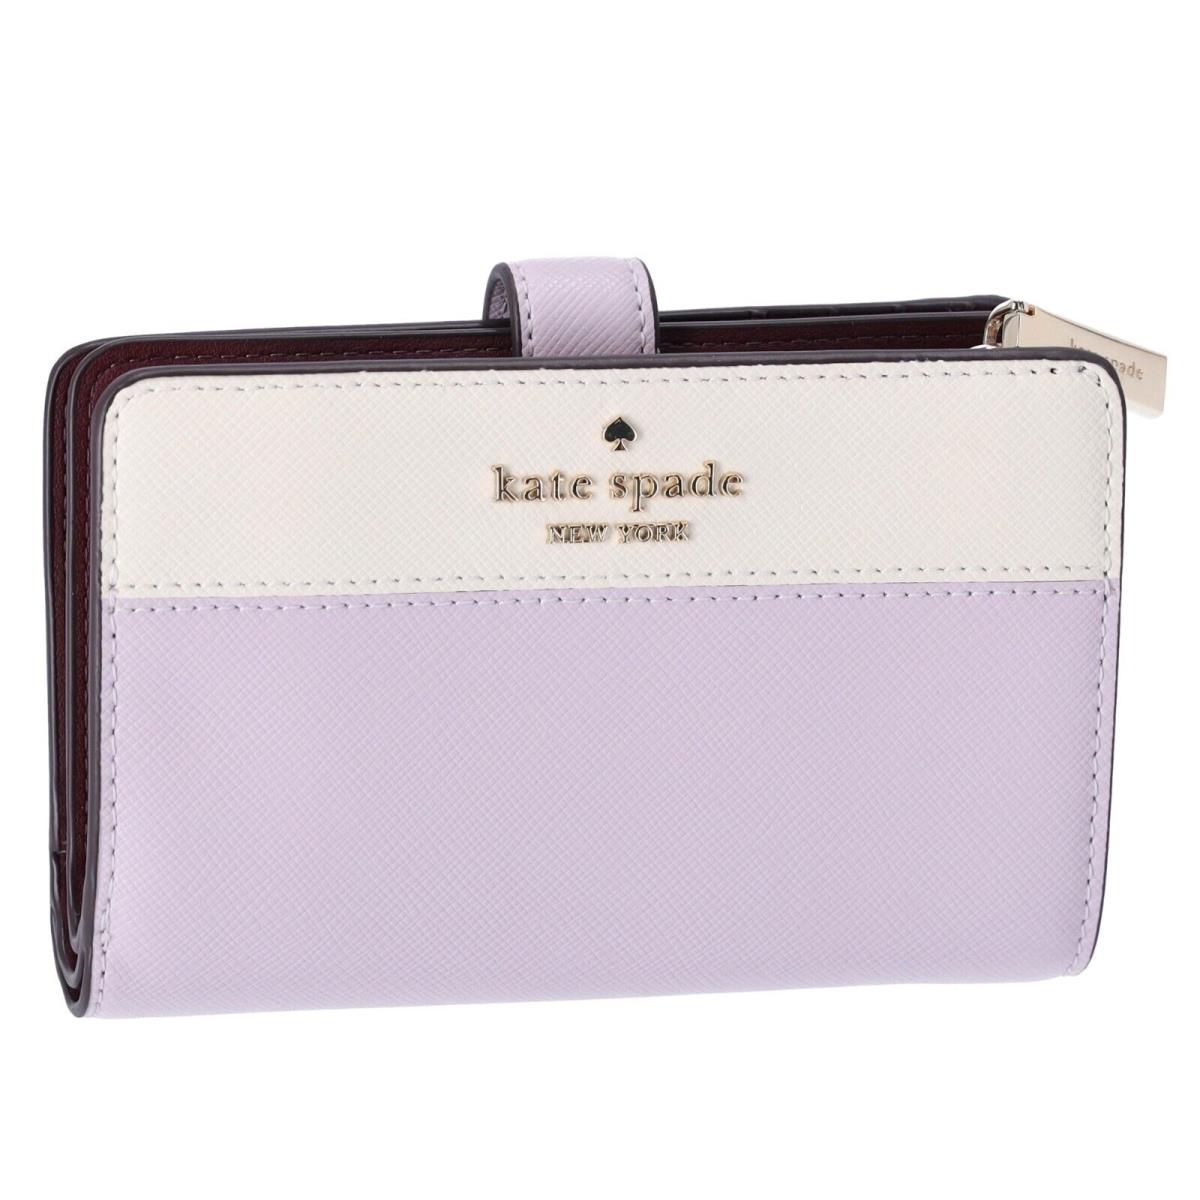 Kate Spade Madison Medium Compact Bifold Wallet Moonlight Lilac Multi Colorblock